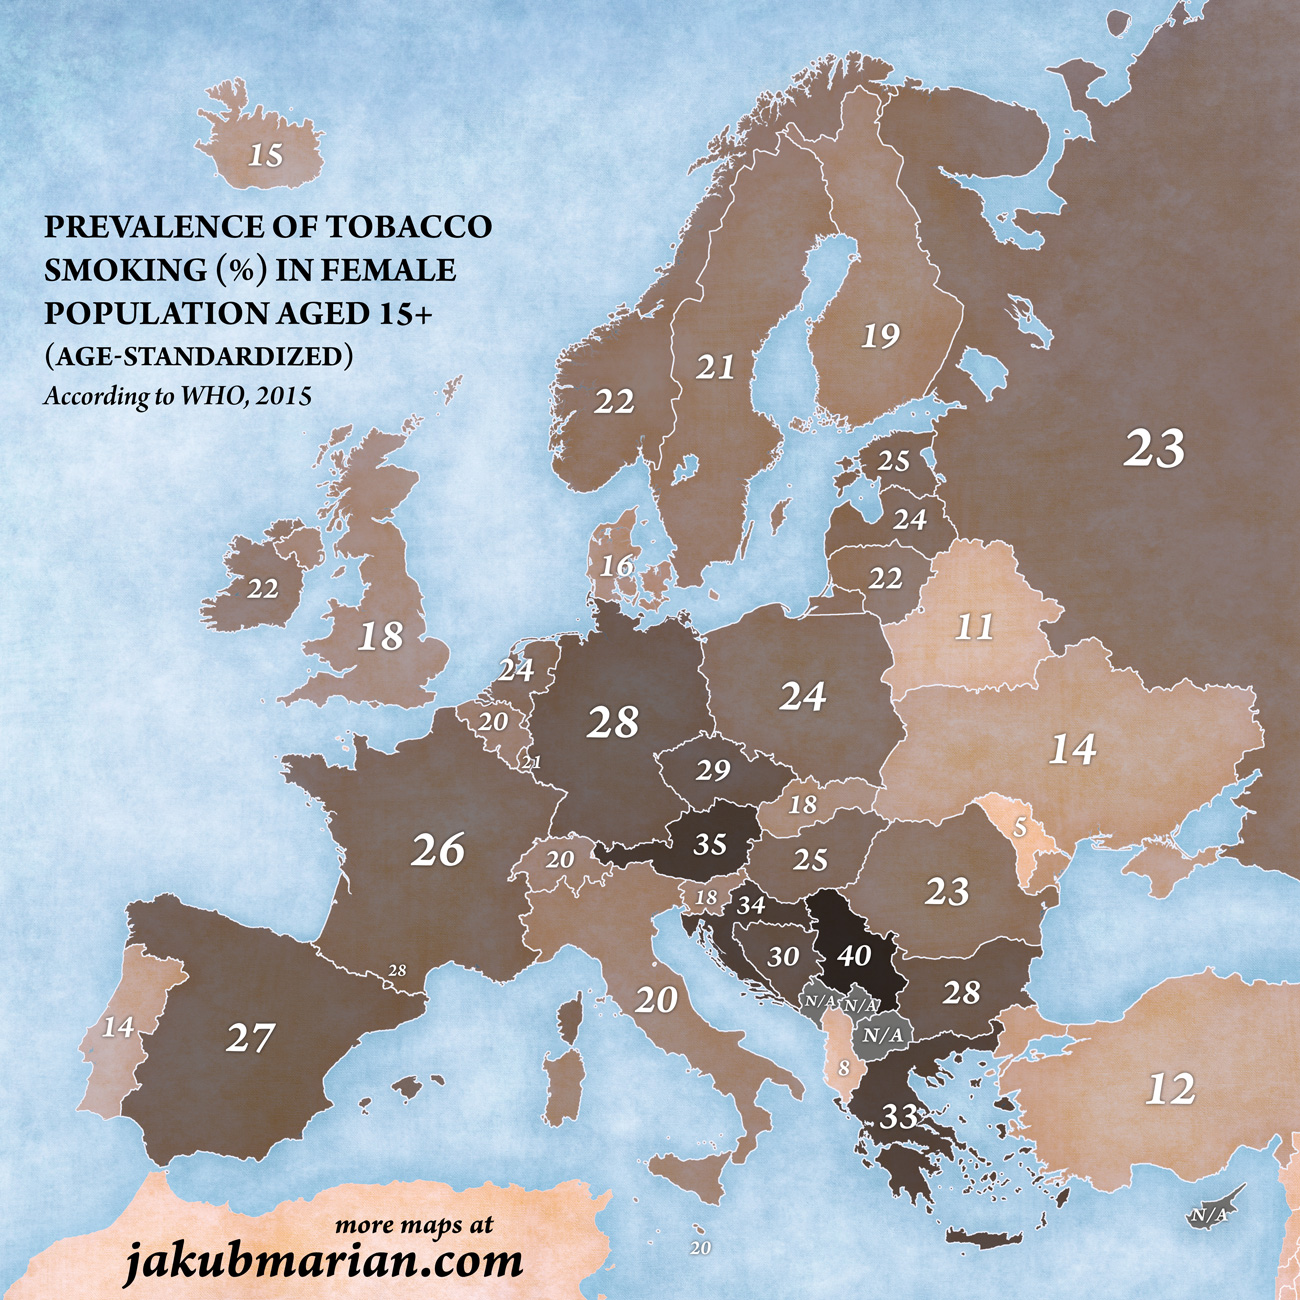 Smoking prevalence among females in Europe